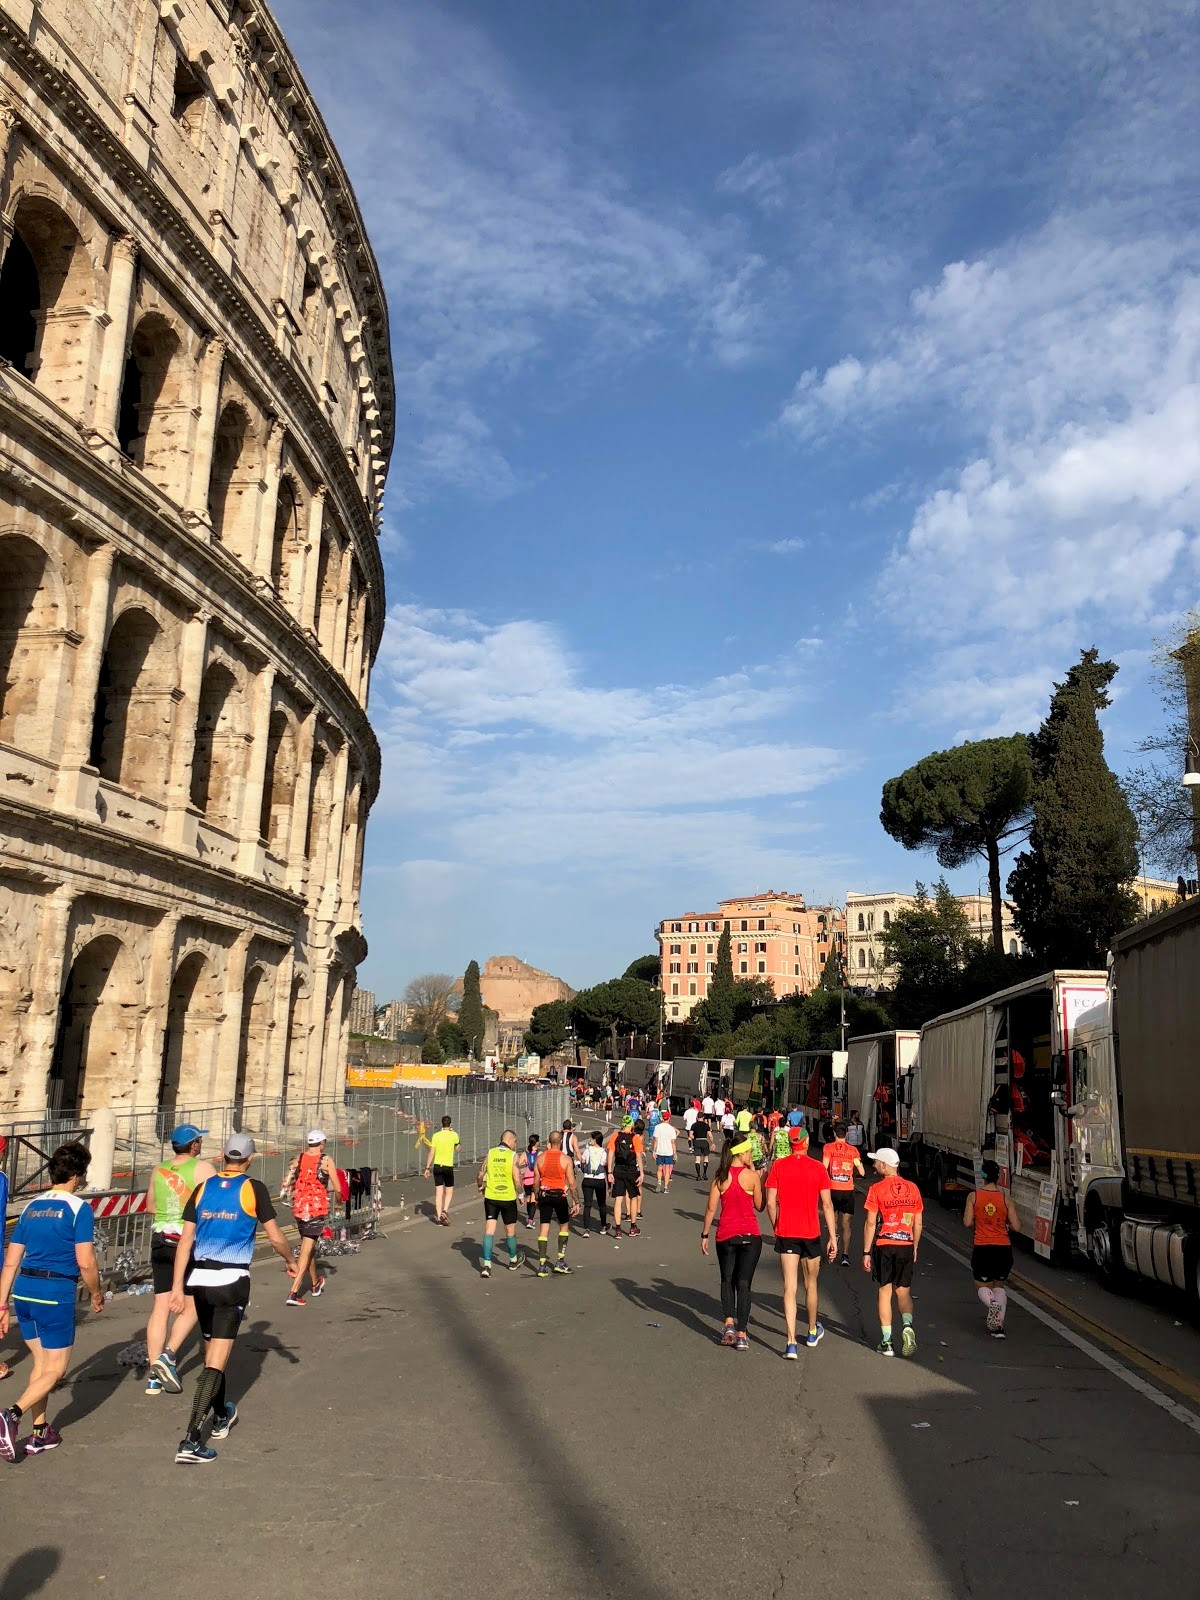 [Хабра-оффтоп] Maratona di Roma, или первый марафон для ИТ-шника - 14